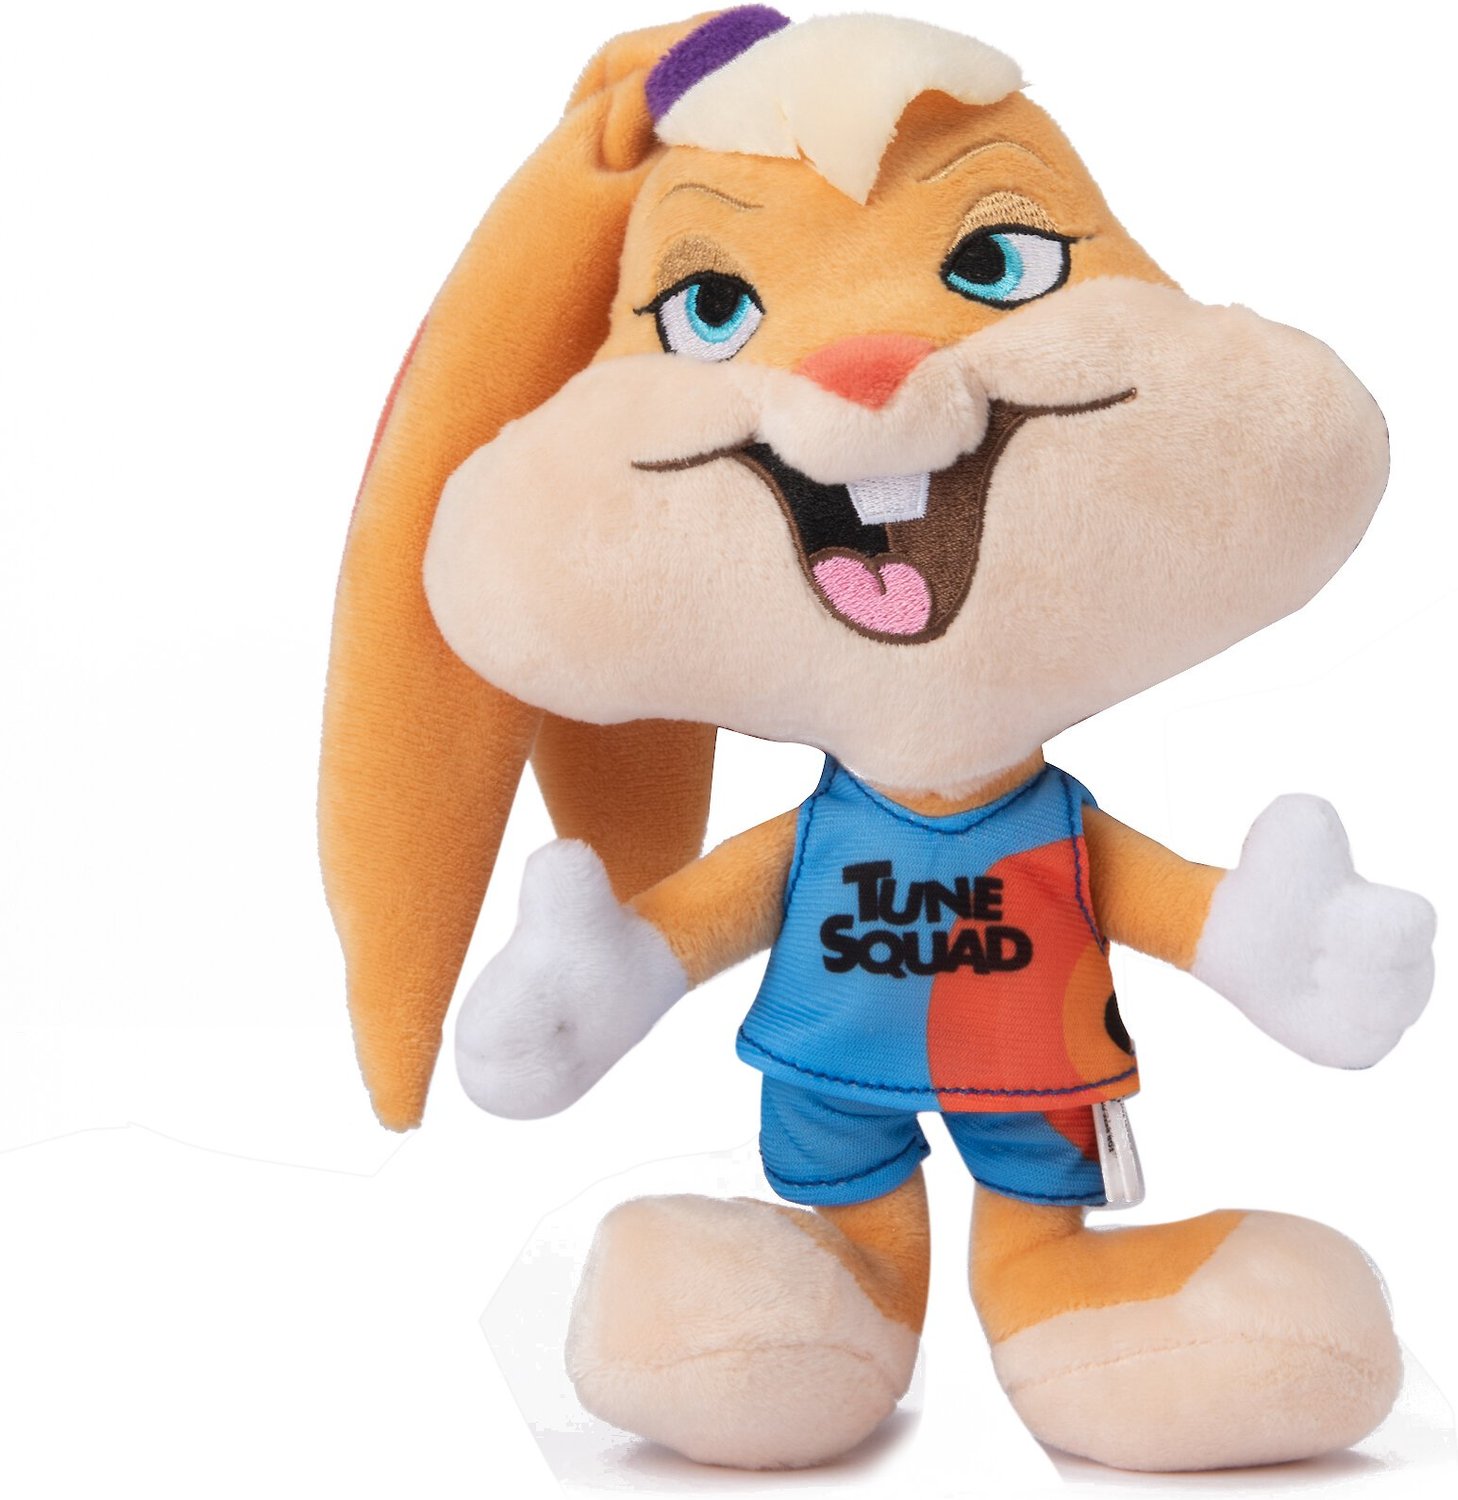 Space Jam 2 Tune Squad Bugs Bunny plush toy 30cm 